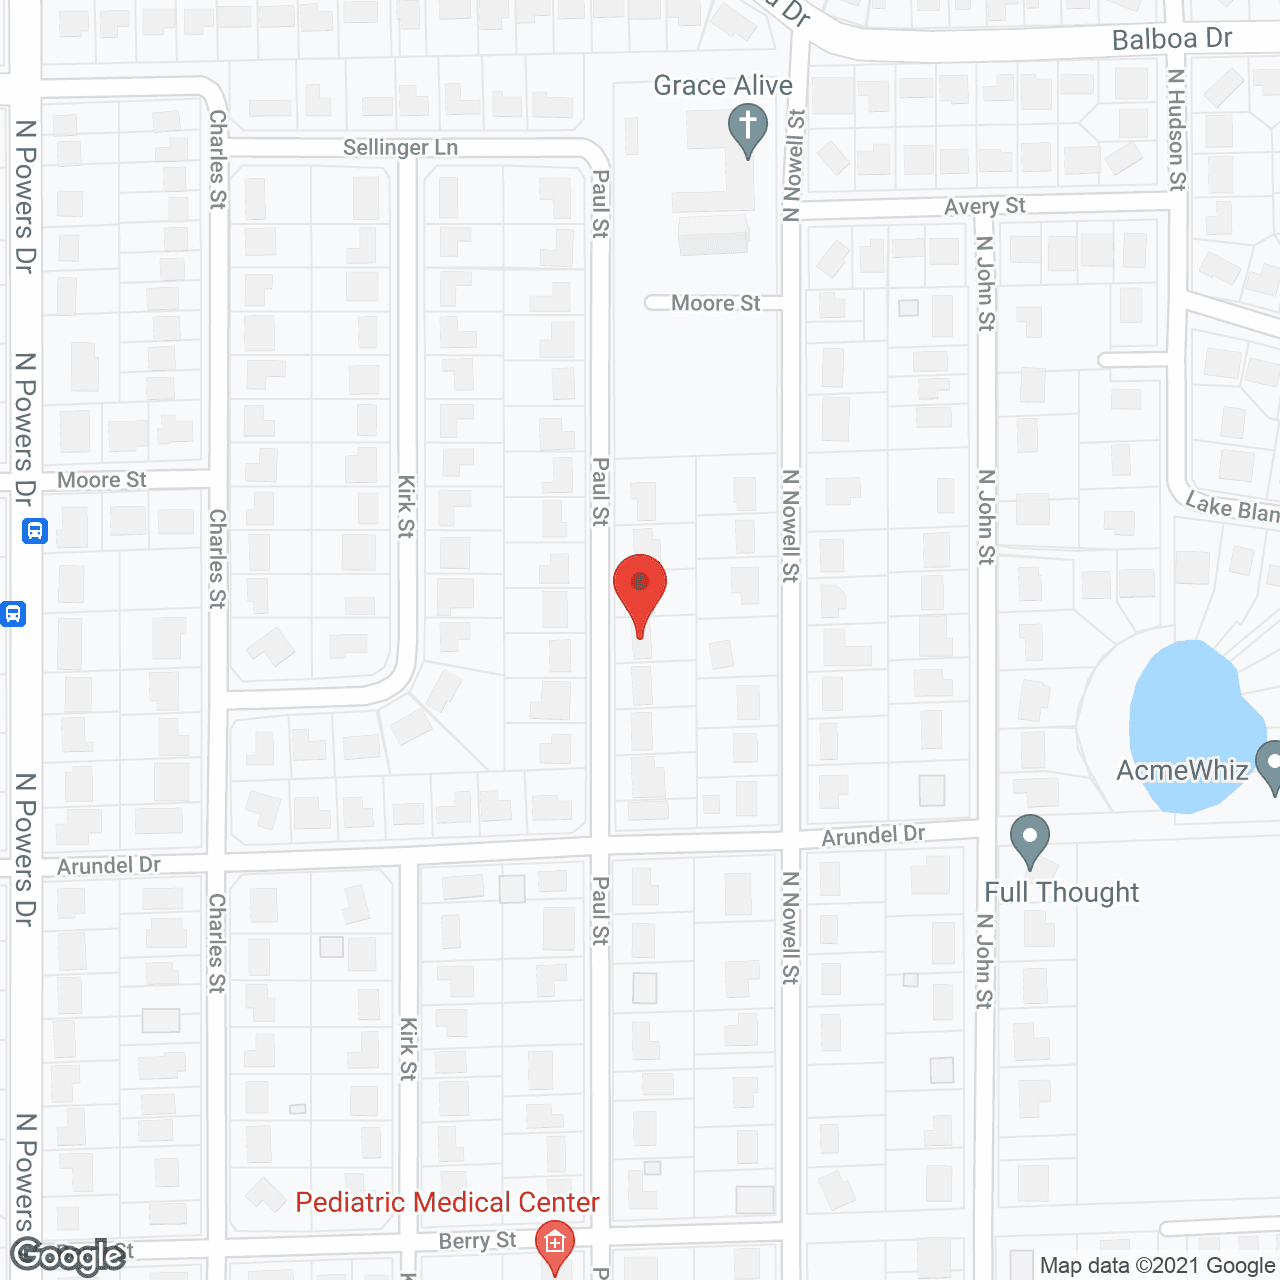 De Paul of West Orlando in google map